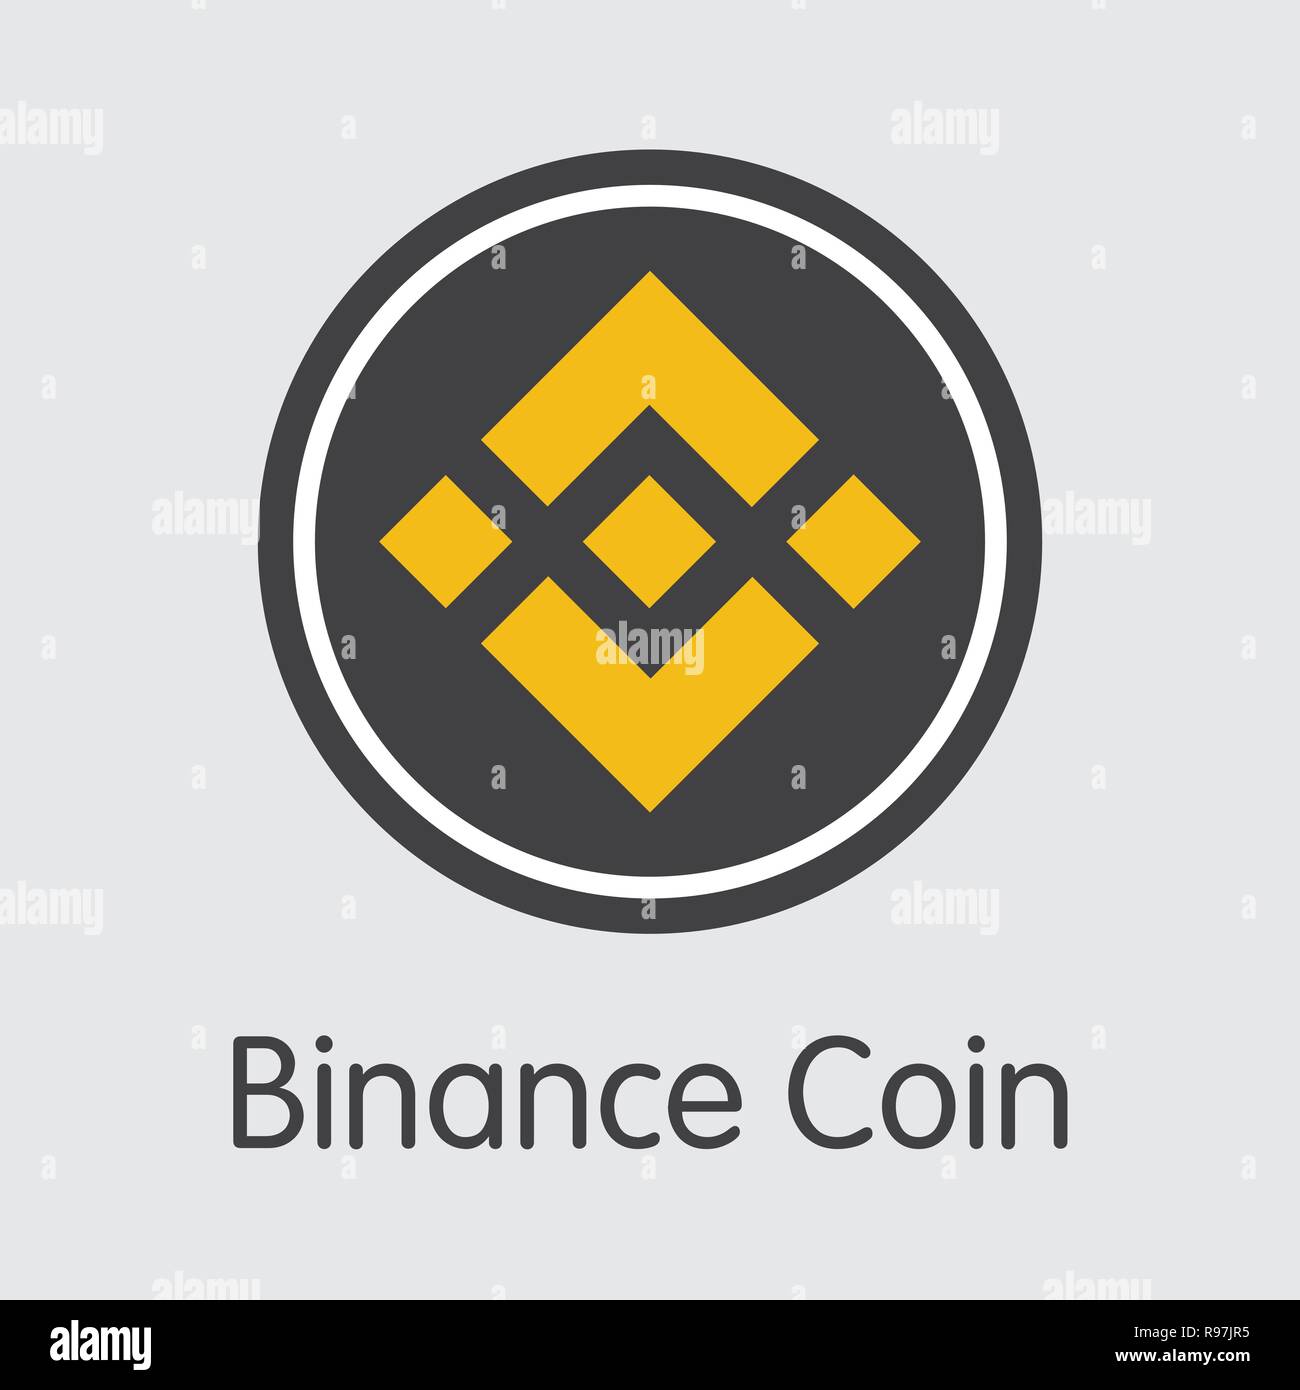 Binance logo Stock Vector Images - Alamy